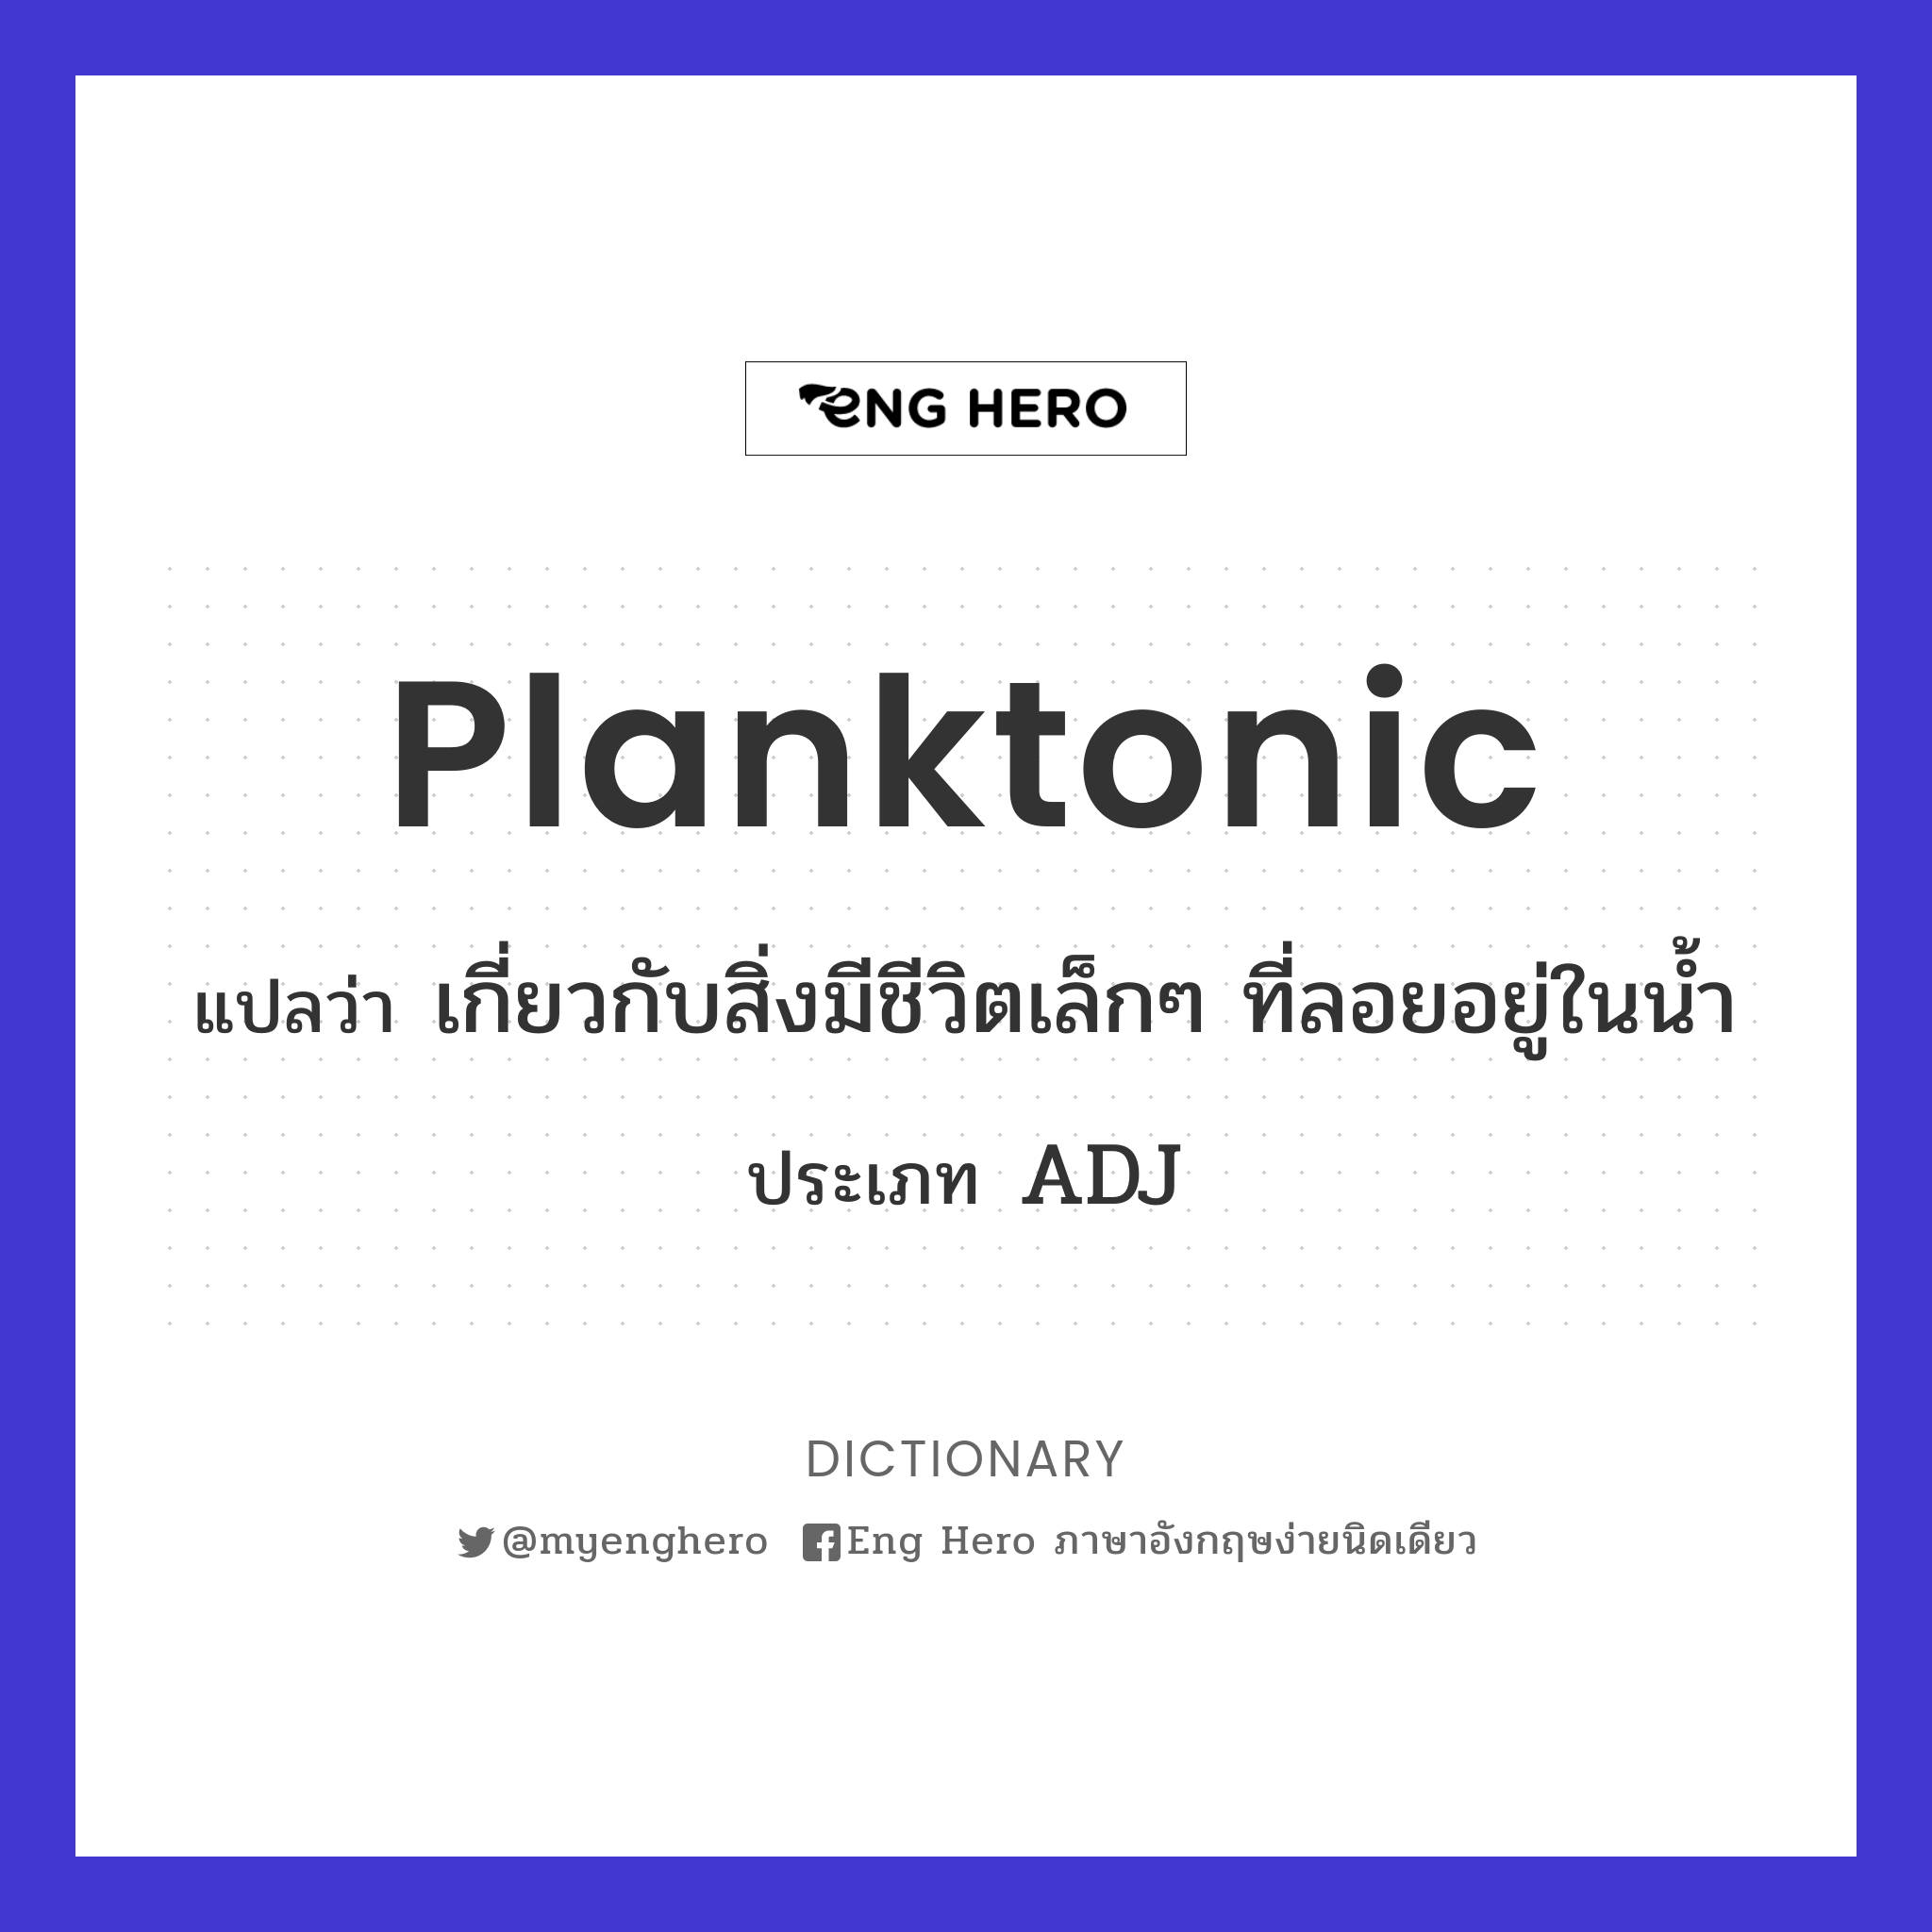 planktonic